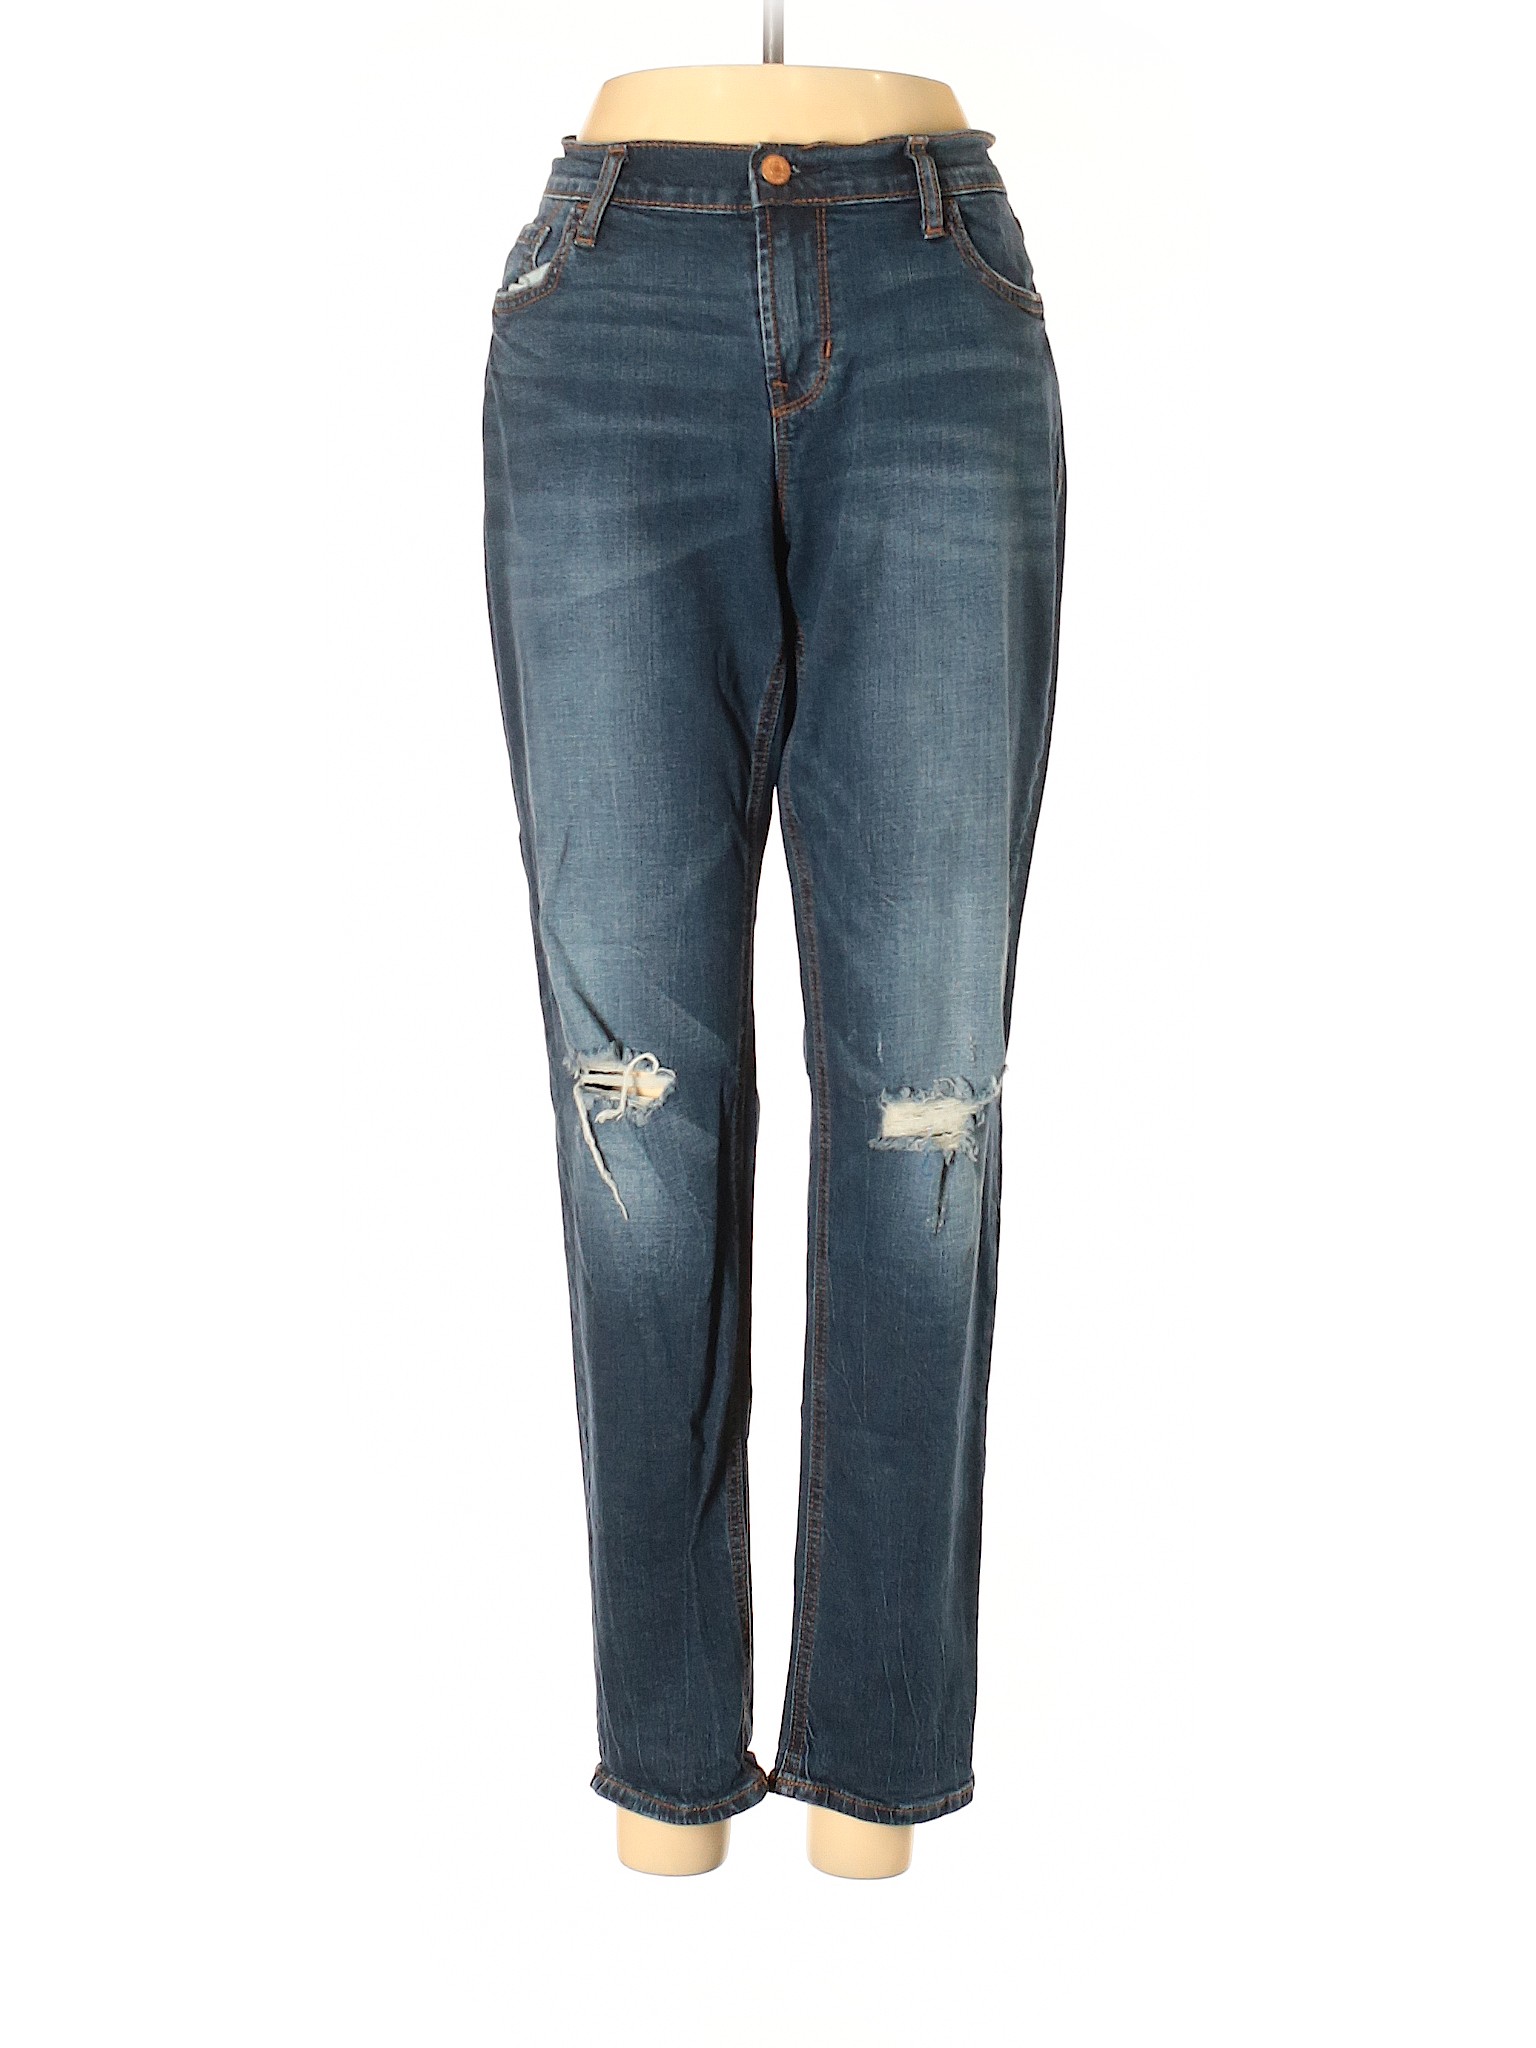 Old Navy Solid Blue Jeans Size 6 - 77% off | thredUP